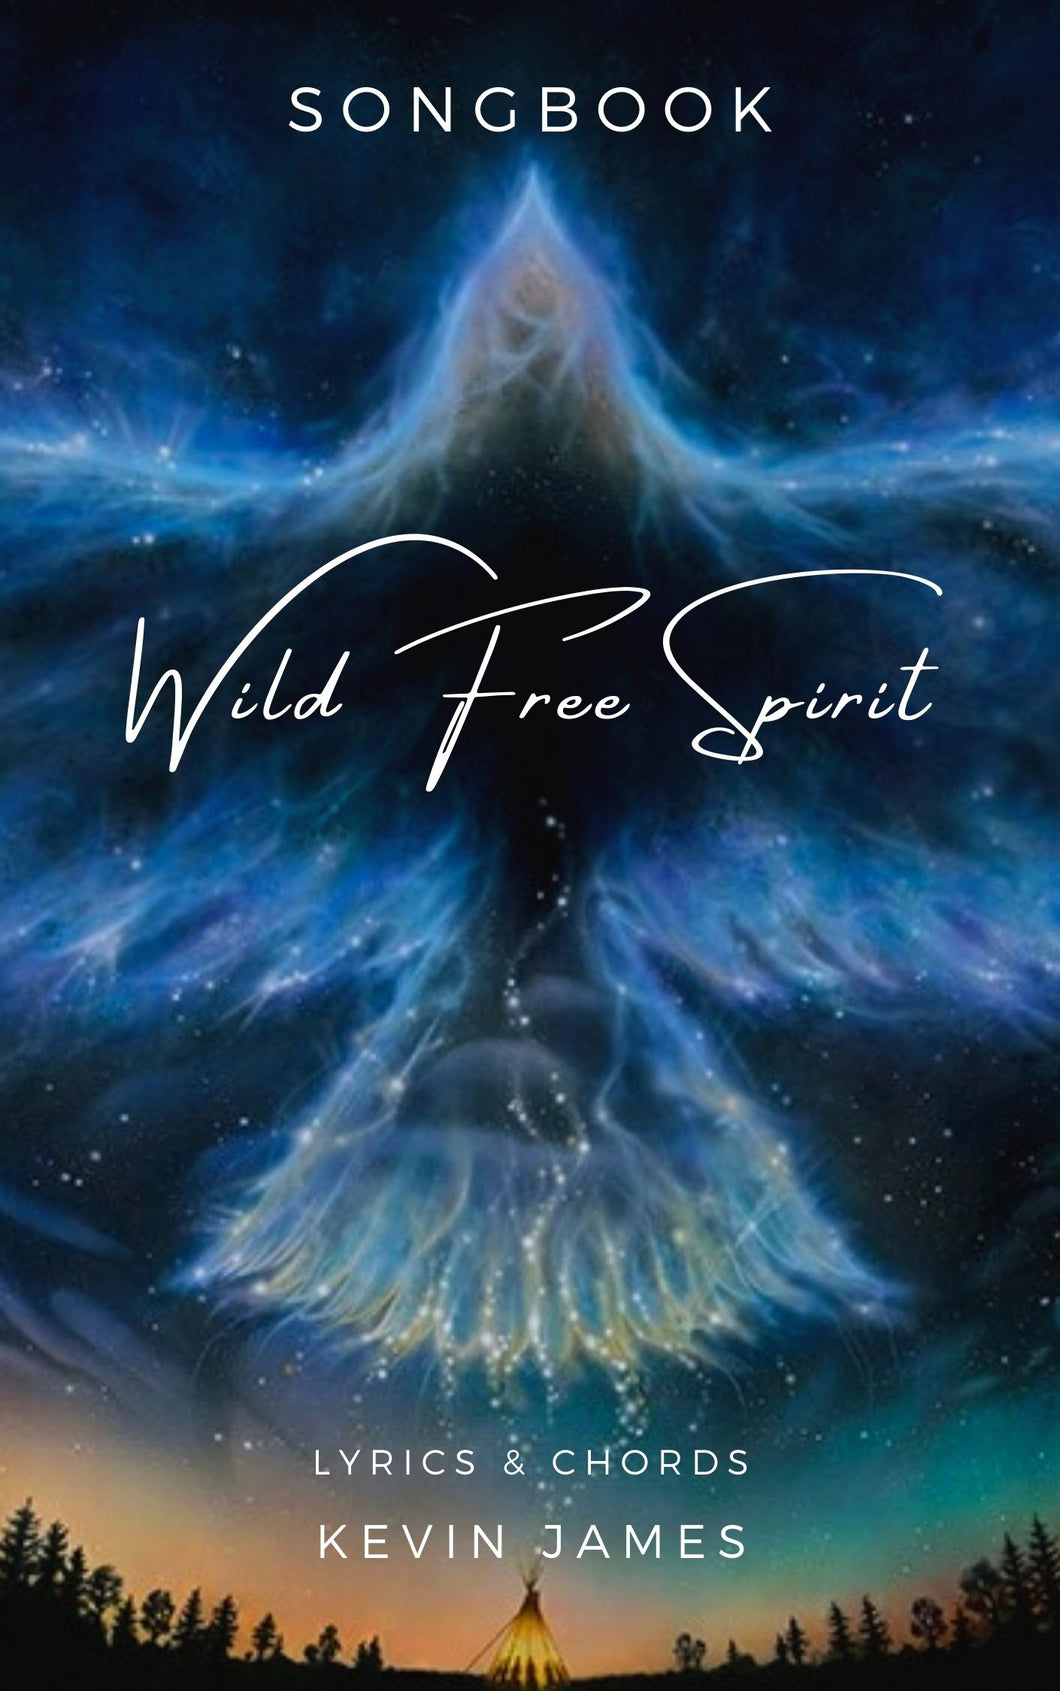 Wild Free Spirit - Digital songbook